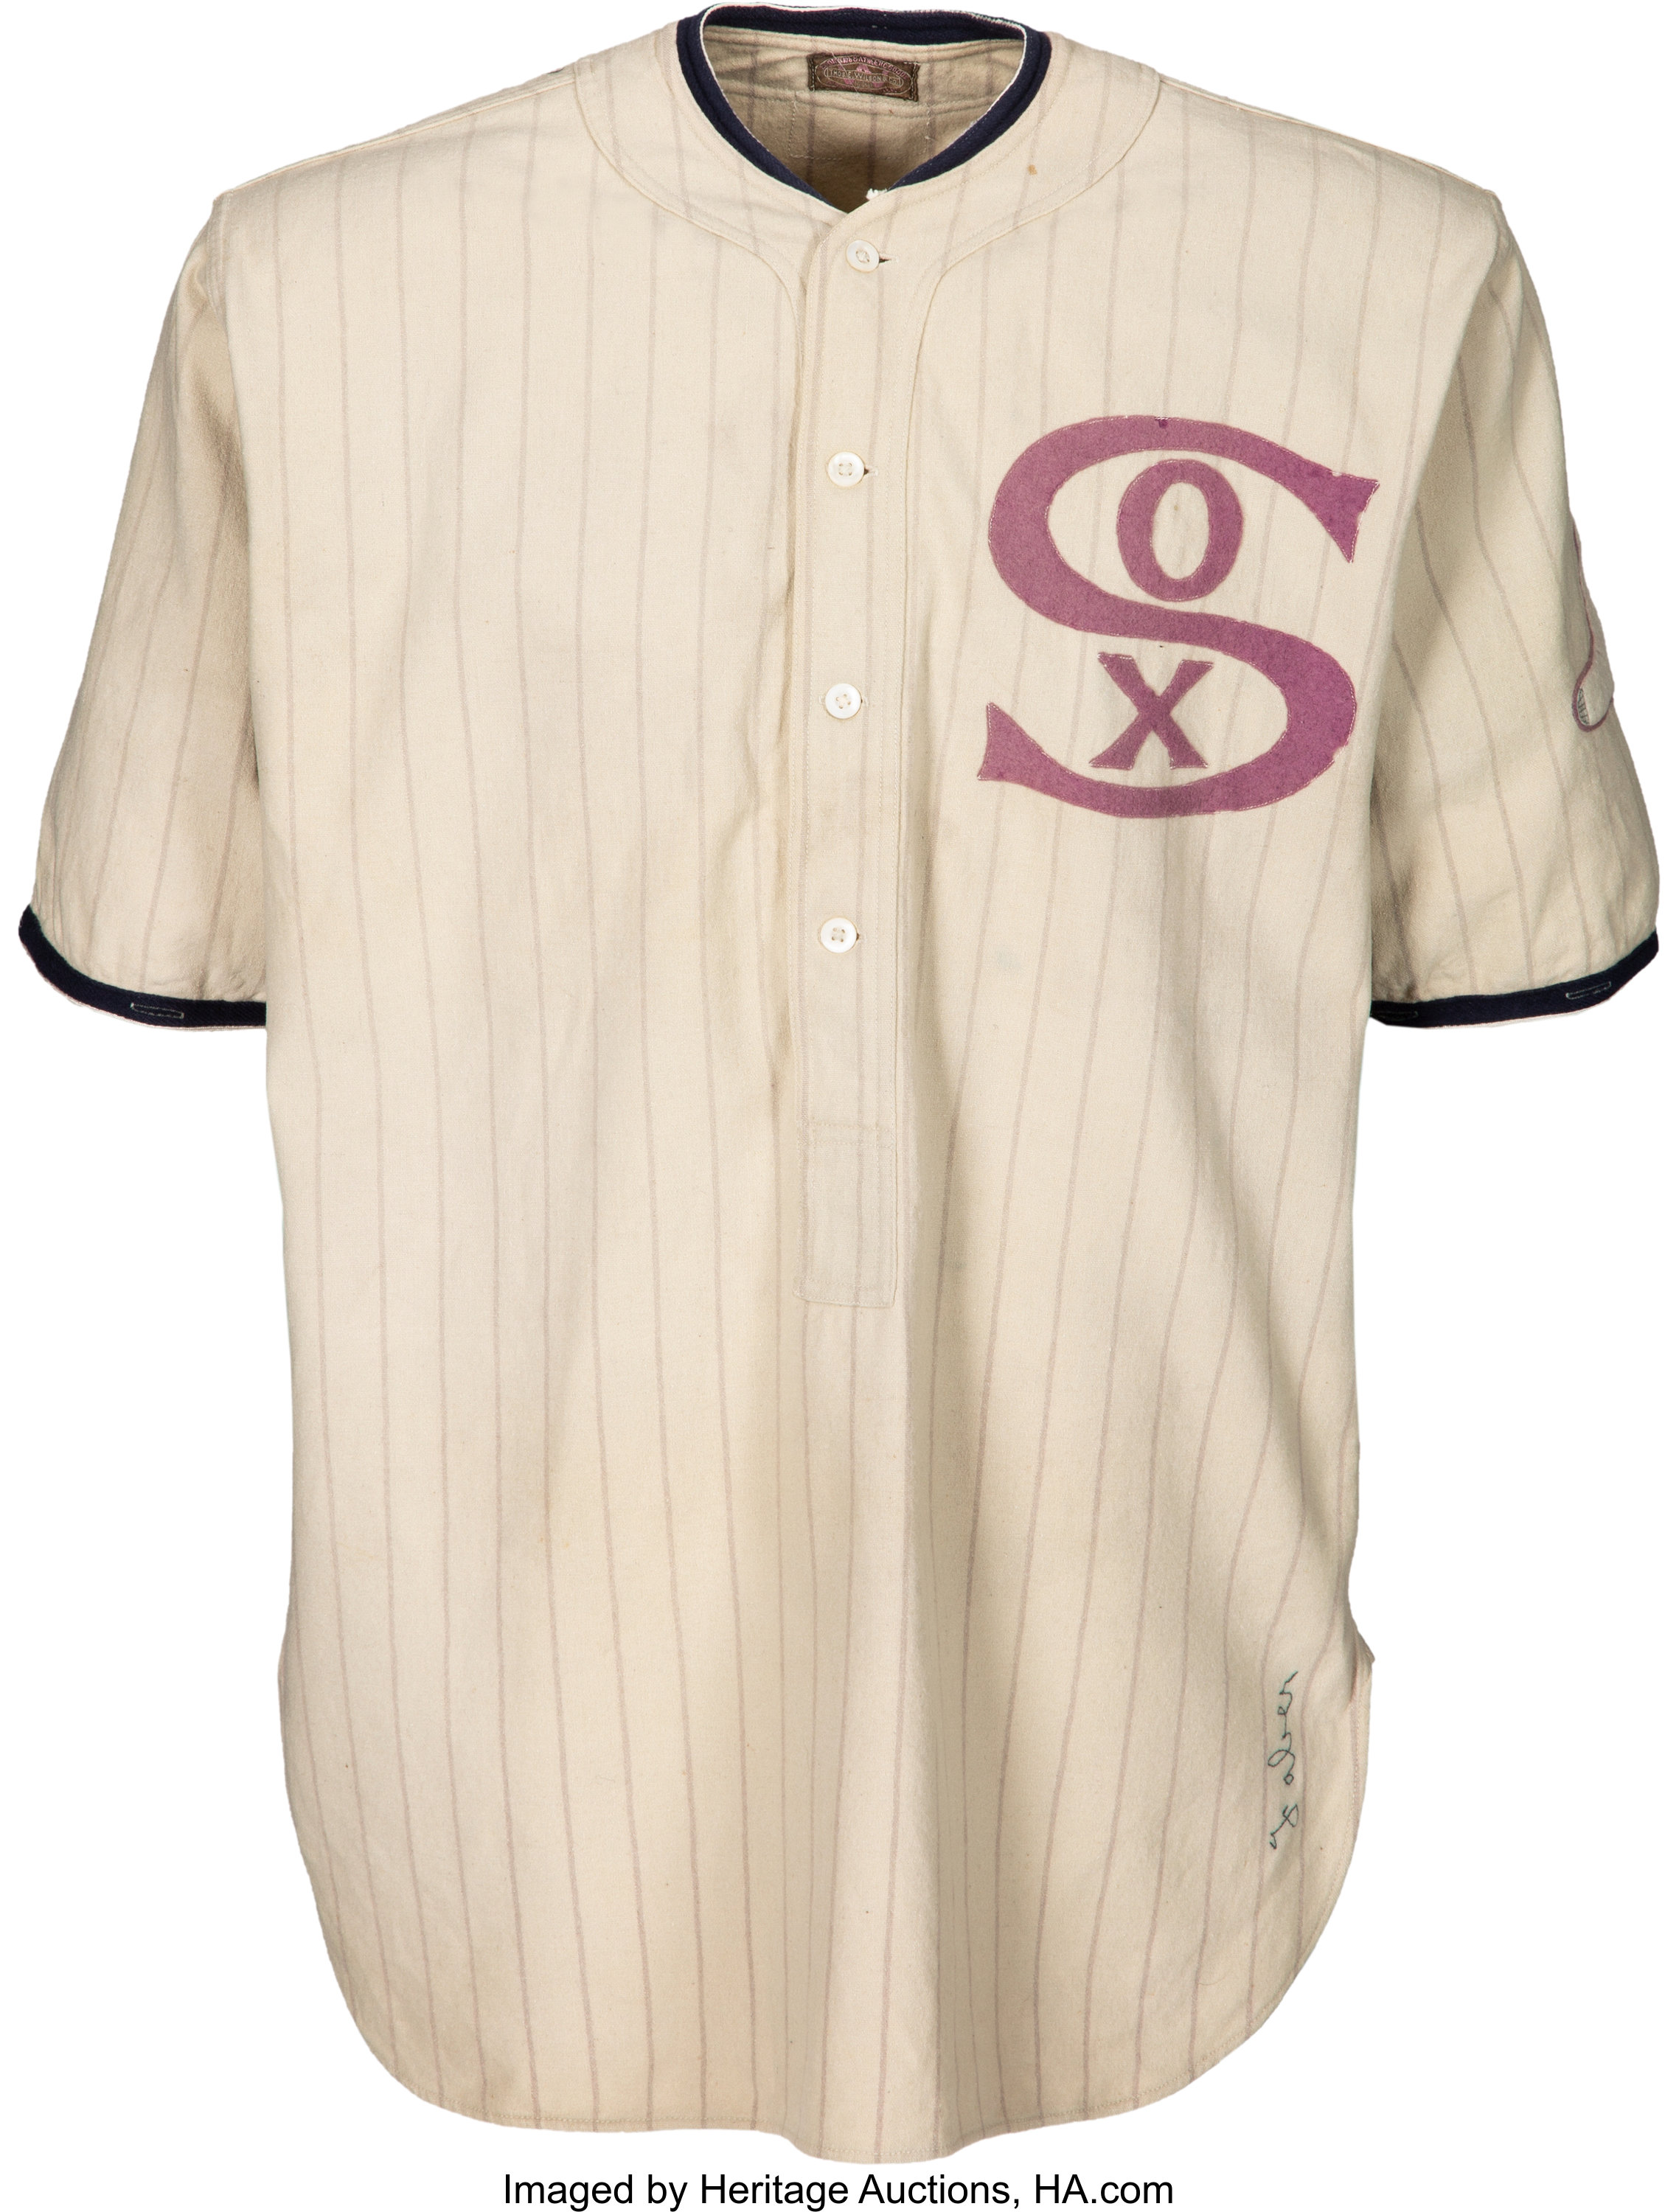 1919 chicago white sox uniforms